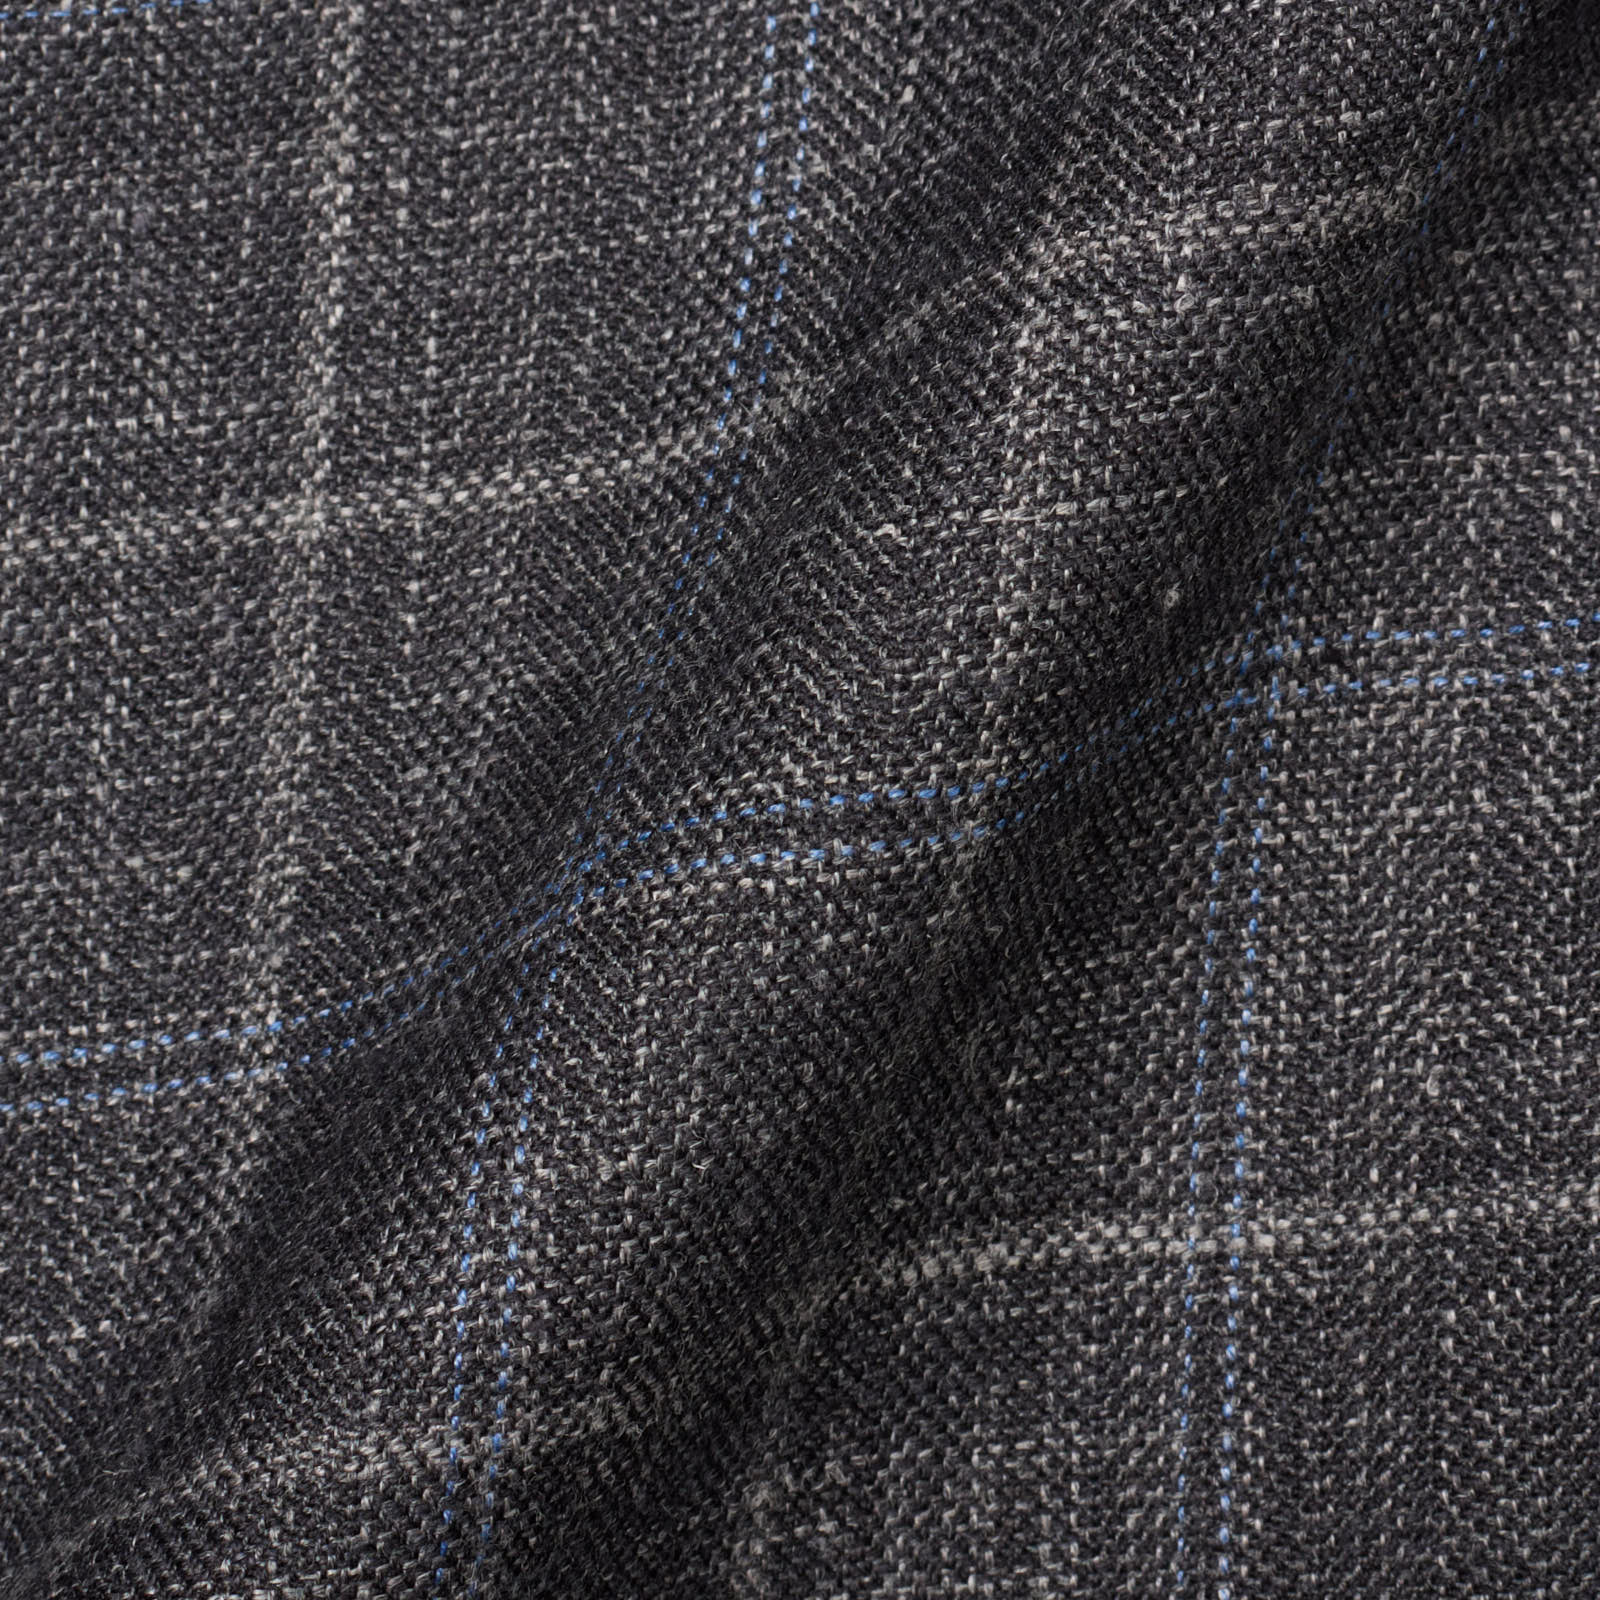 SARTORIA PARTENOPEA x VANNUCCI Gray Wool-Silk-Linen Jacket EU 46 NEW US 36